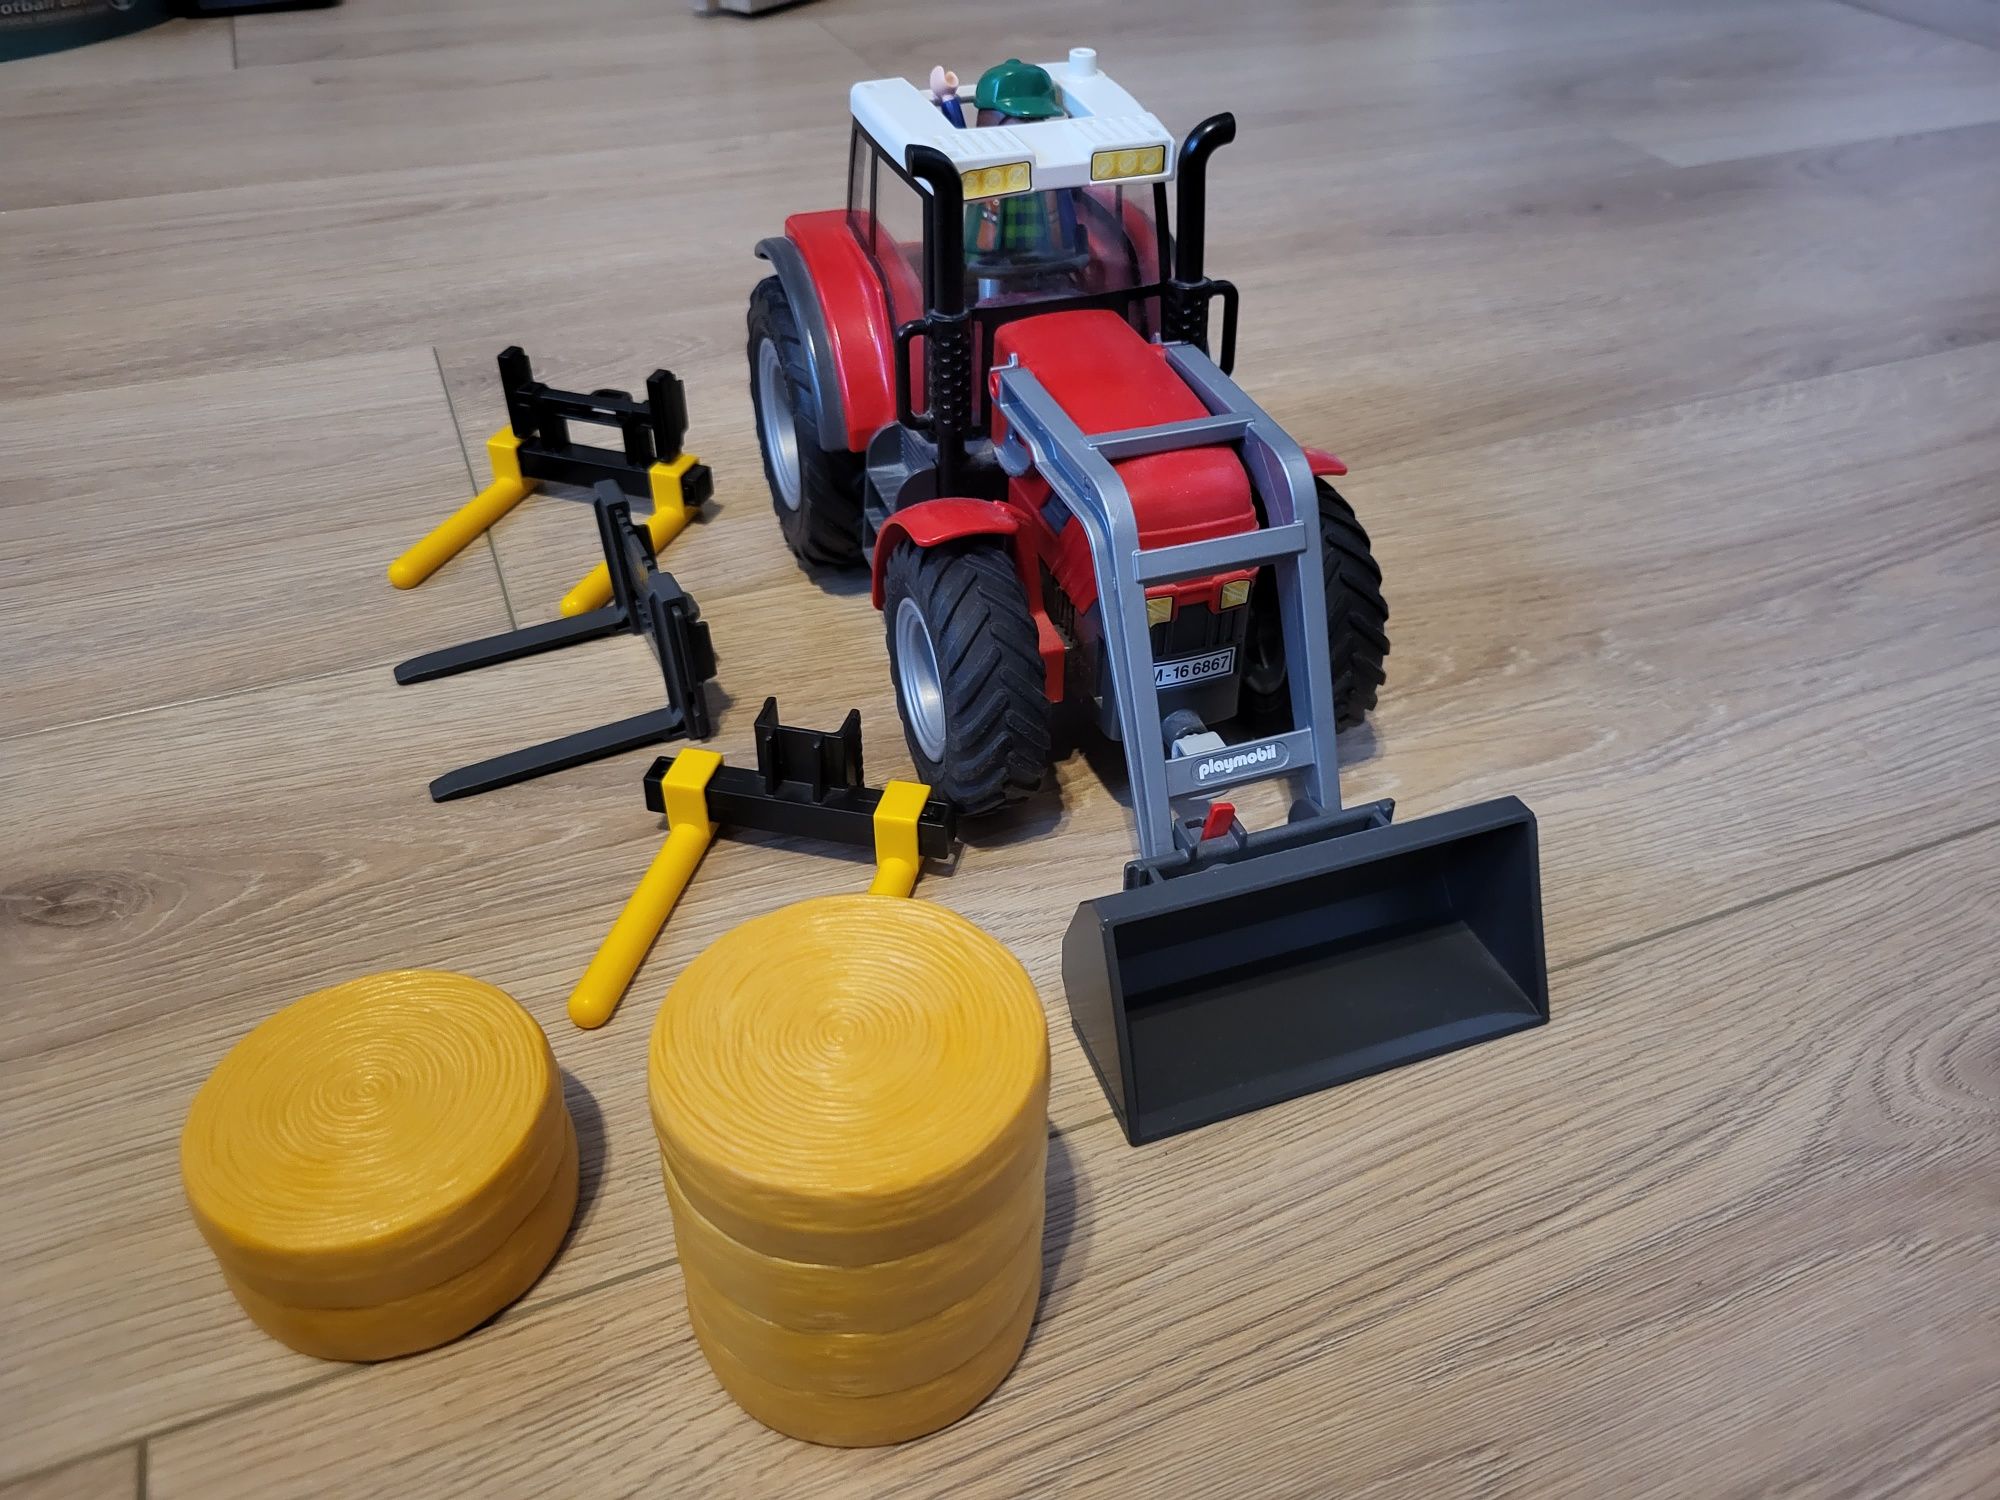 Traktor playmobil